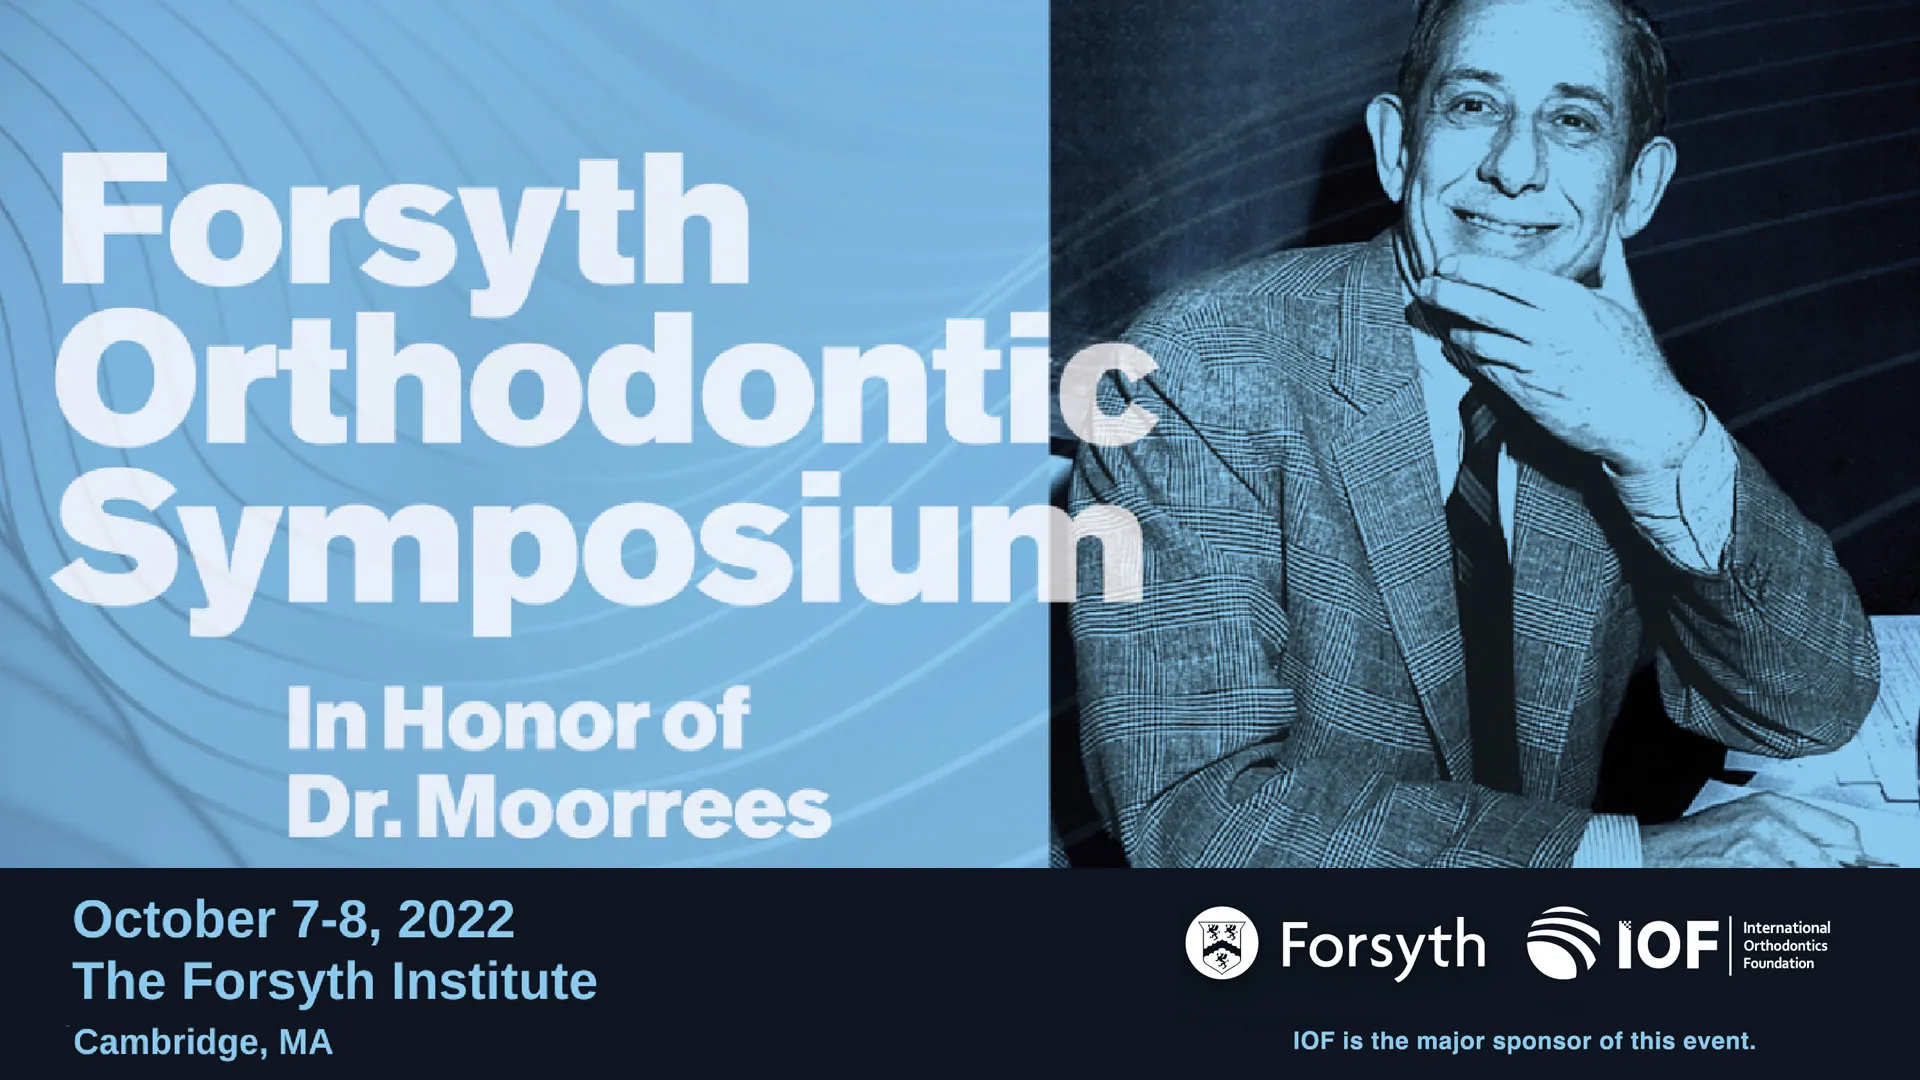 Forsyth Orthodontic Symposium